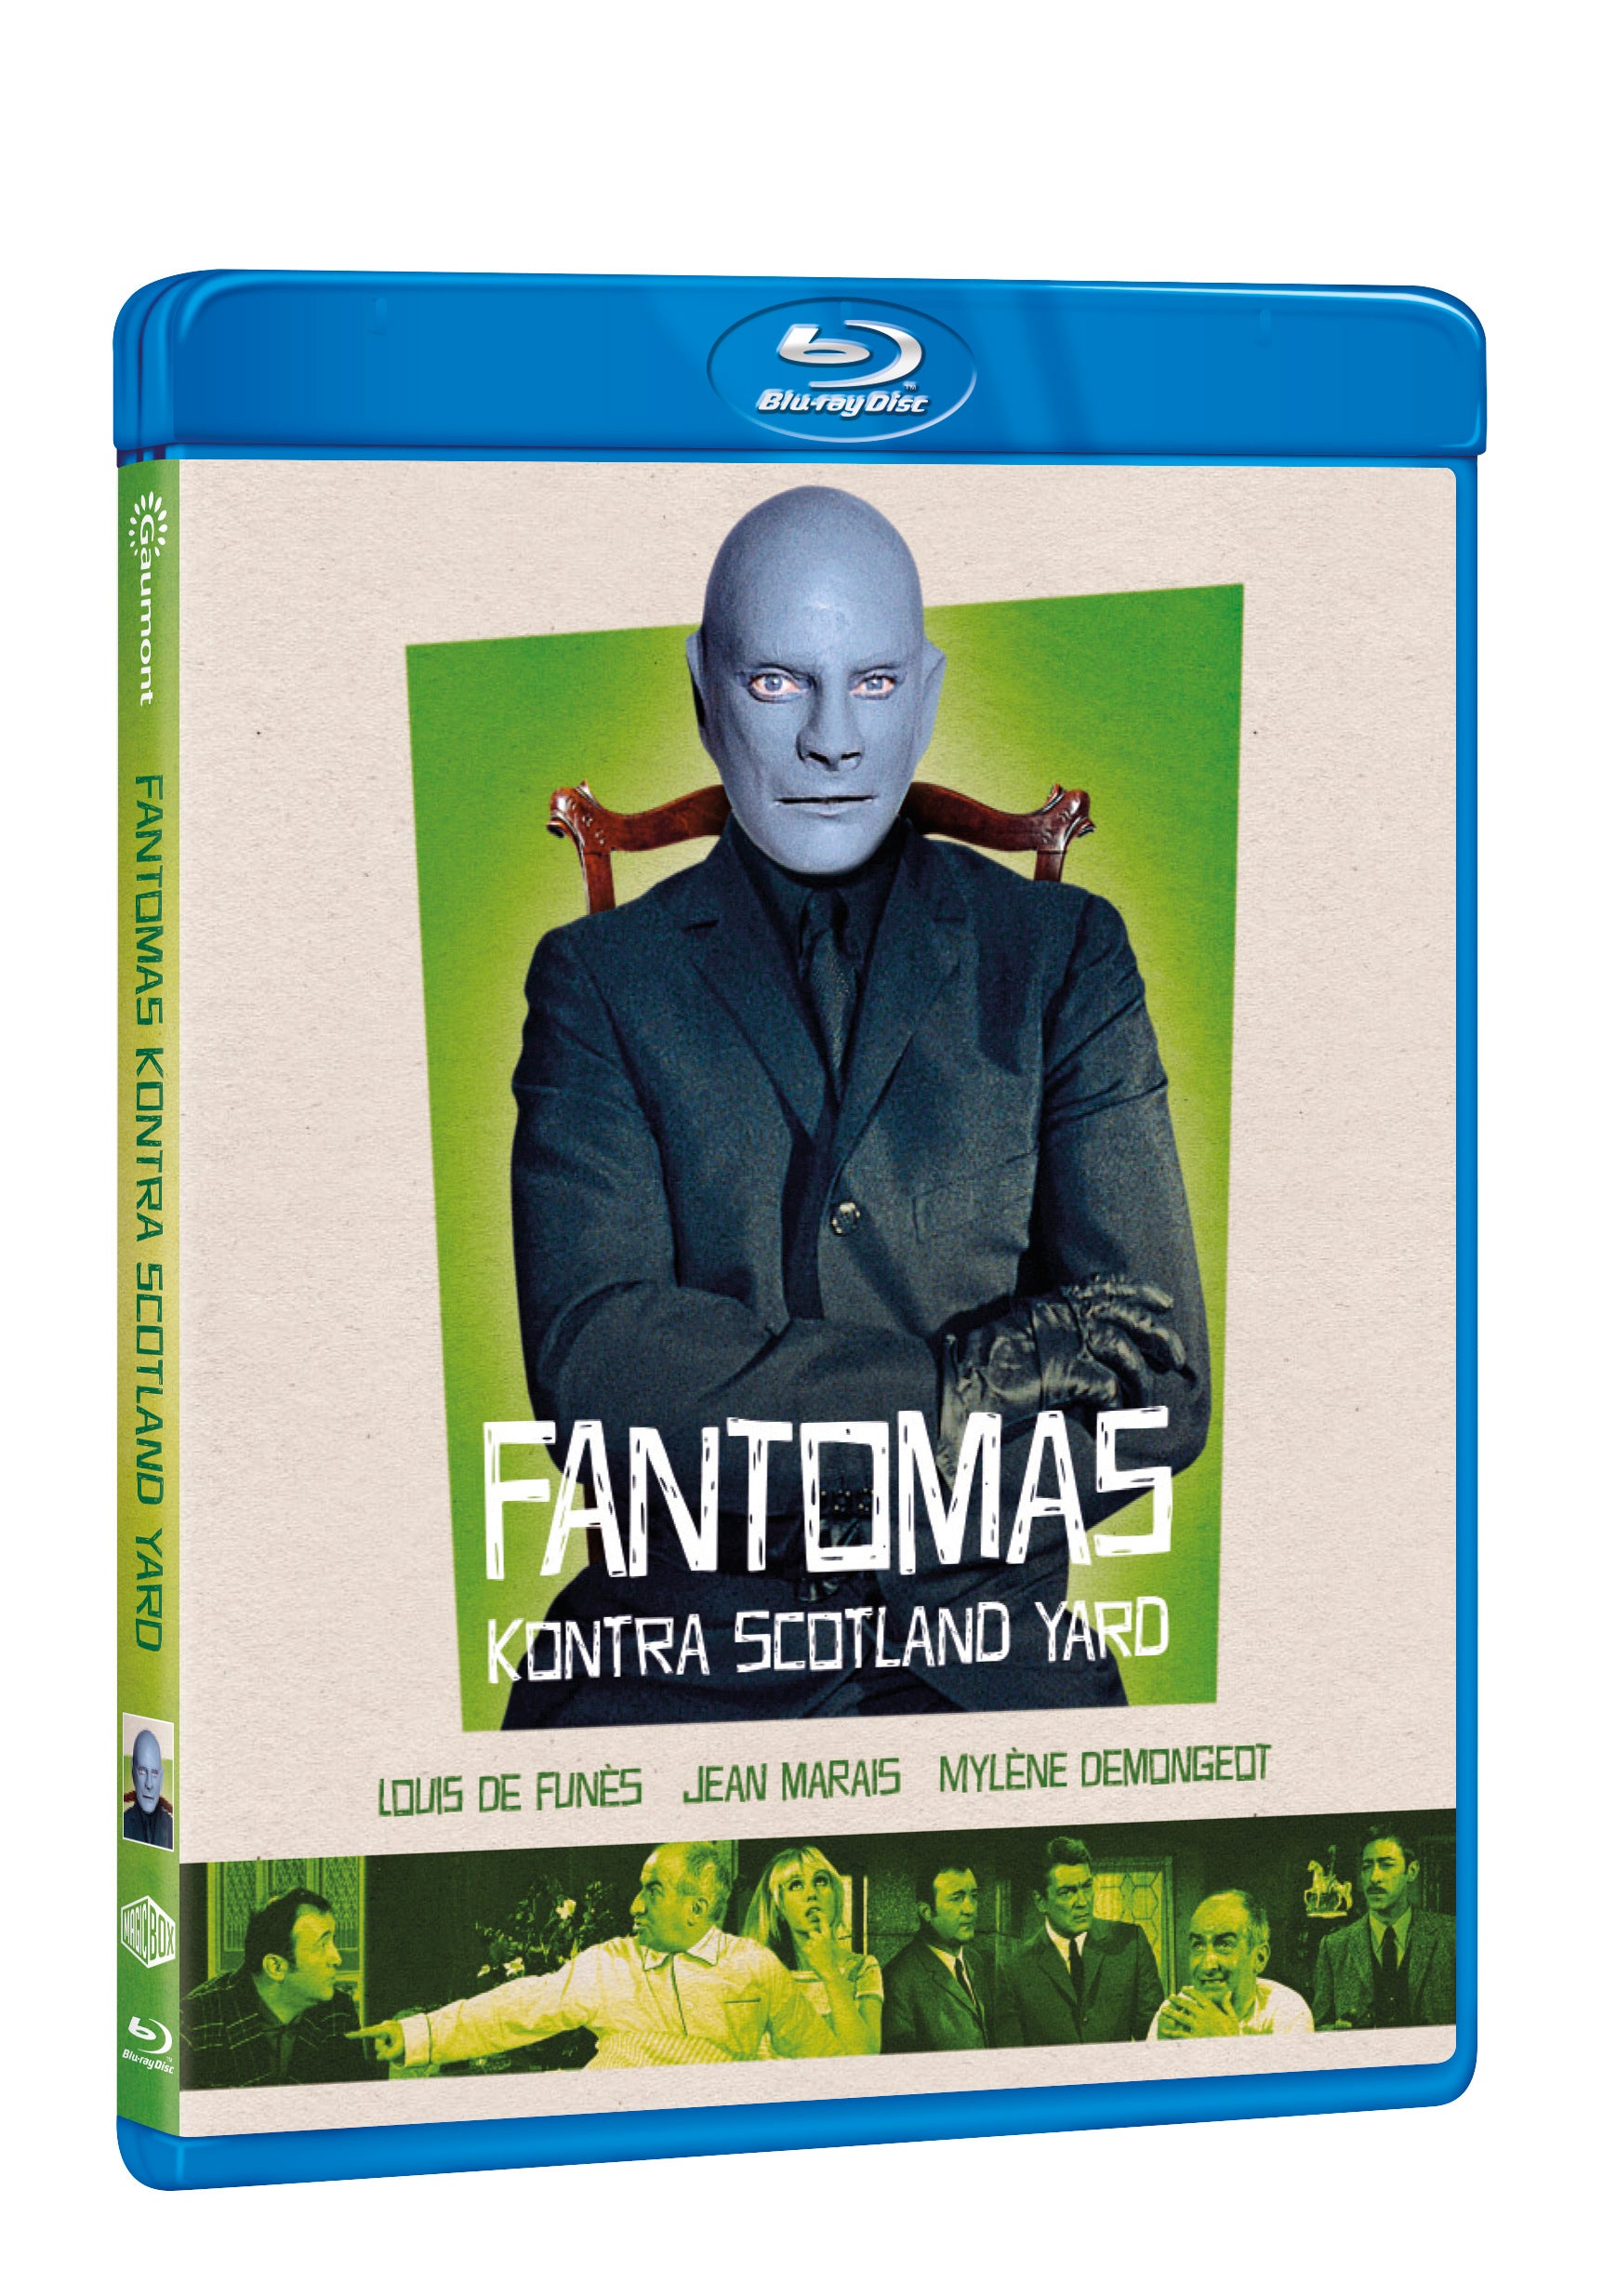 Fantomas kontra Scotland Yard BD / Fantômas contre le Scotland Yard - Czech version